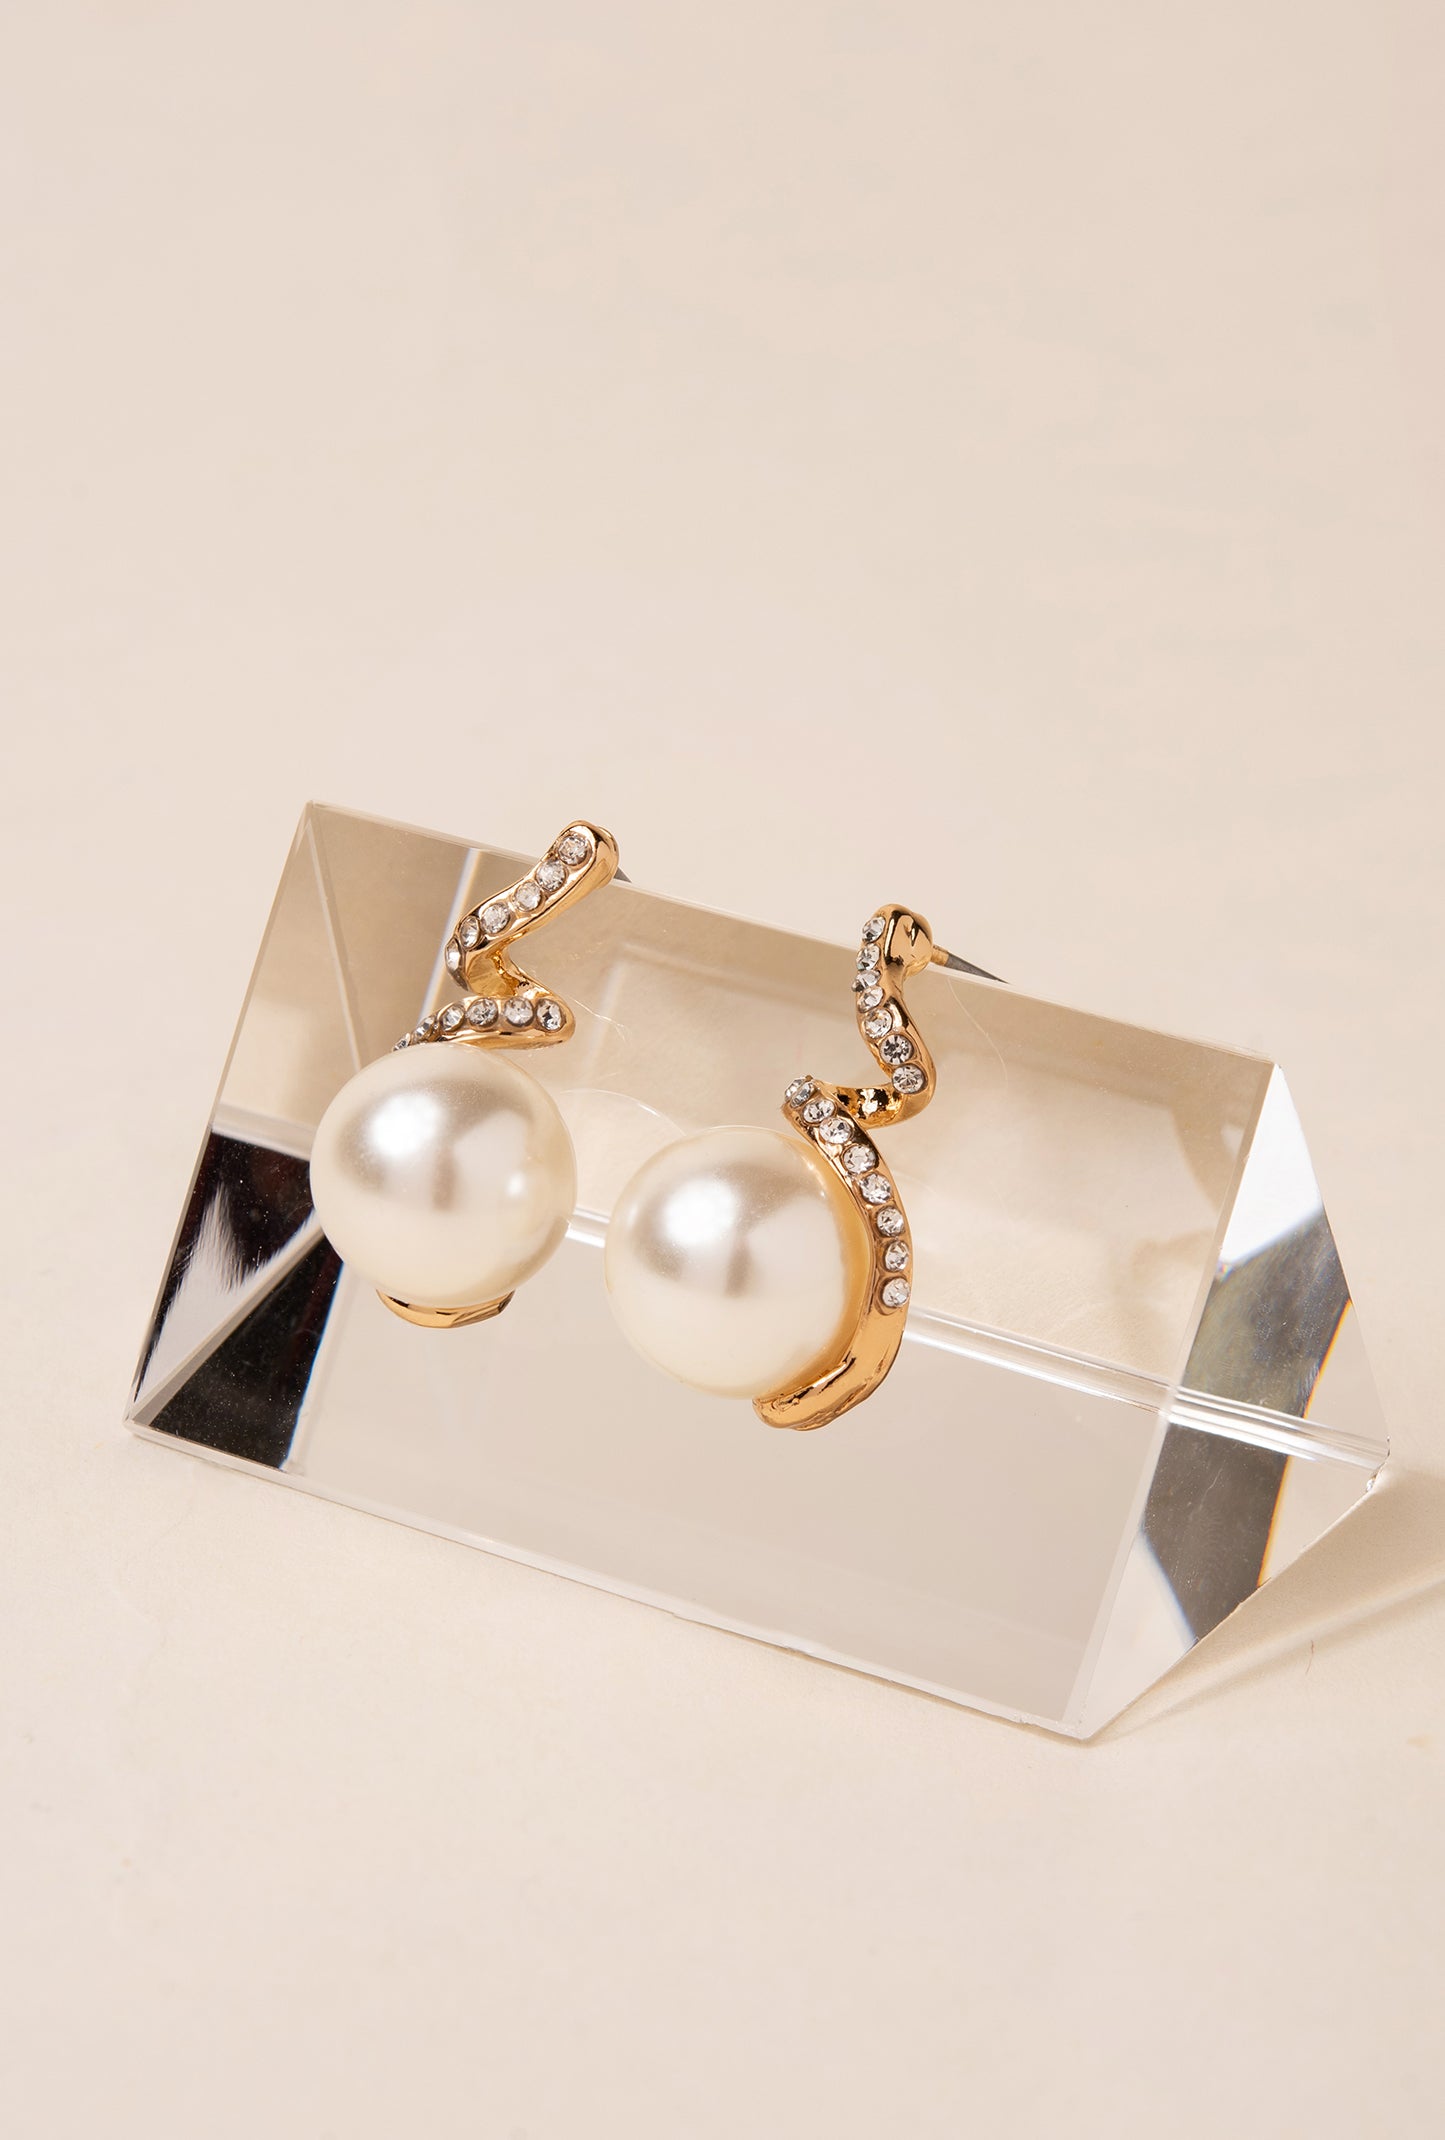 Rhinestone Swirl with Pearl Earrings - Gold